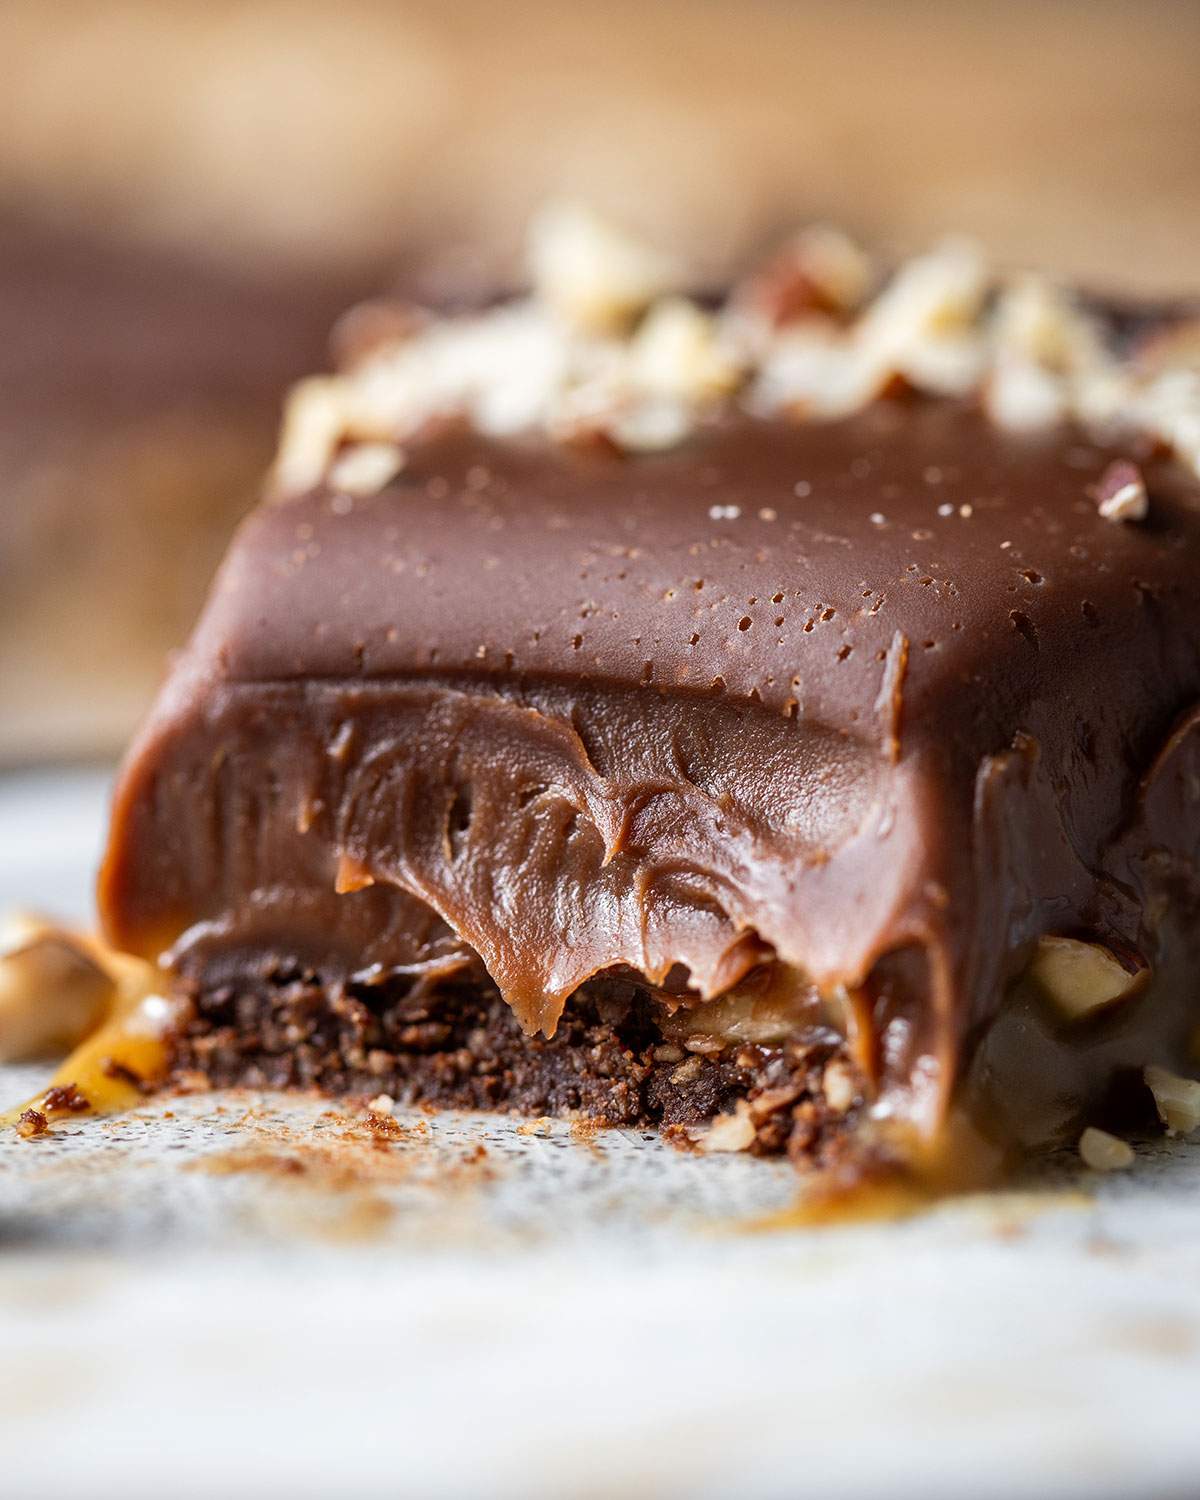 A slice of half-eaten decadent chocolate tart up close.